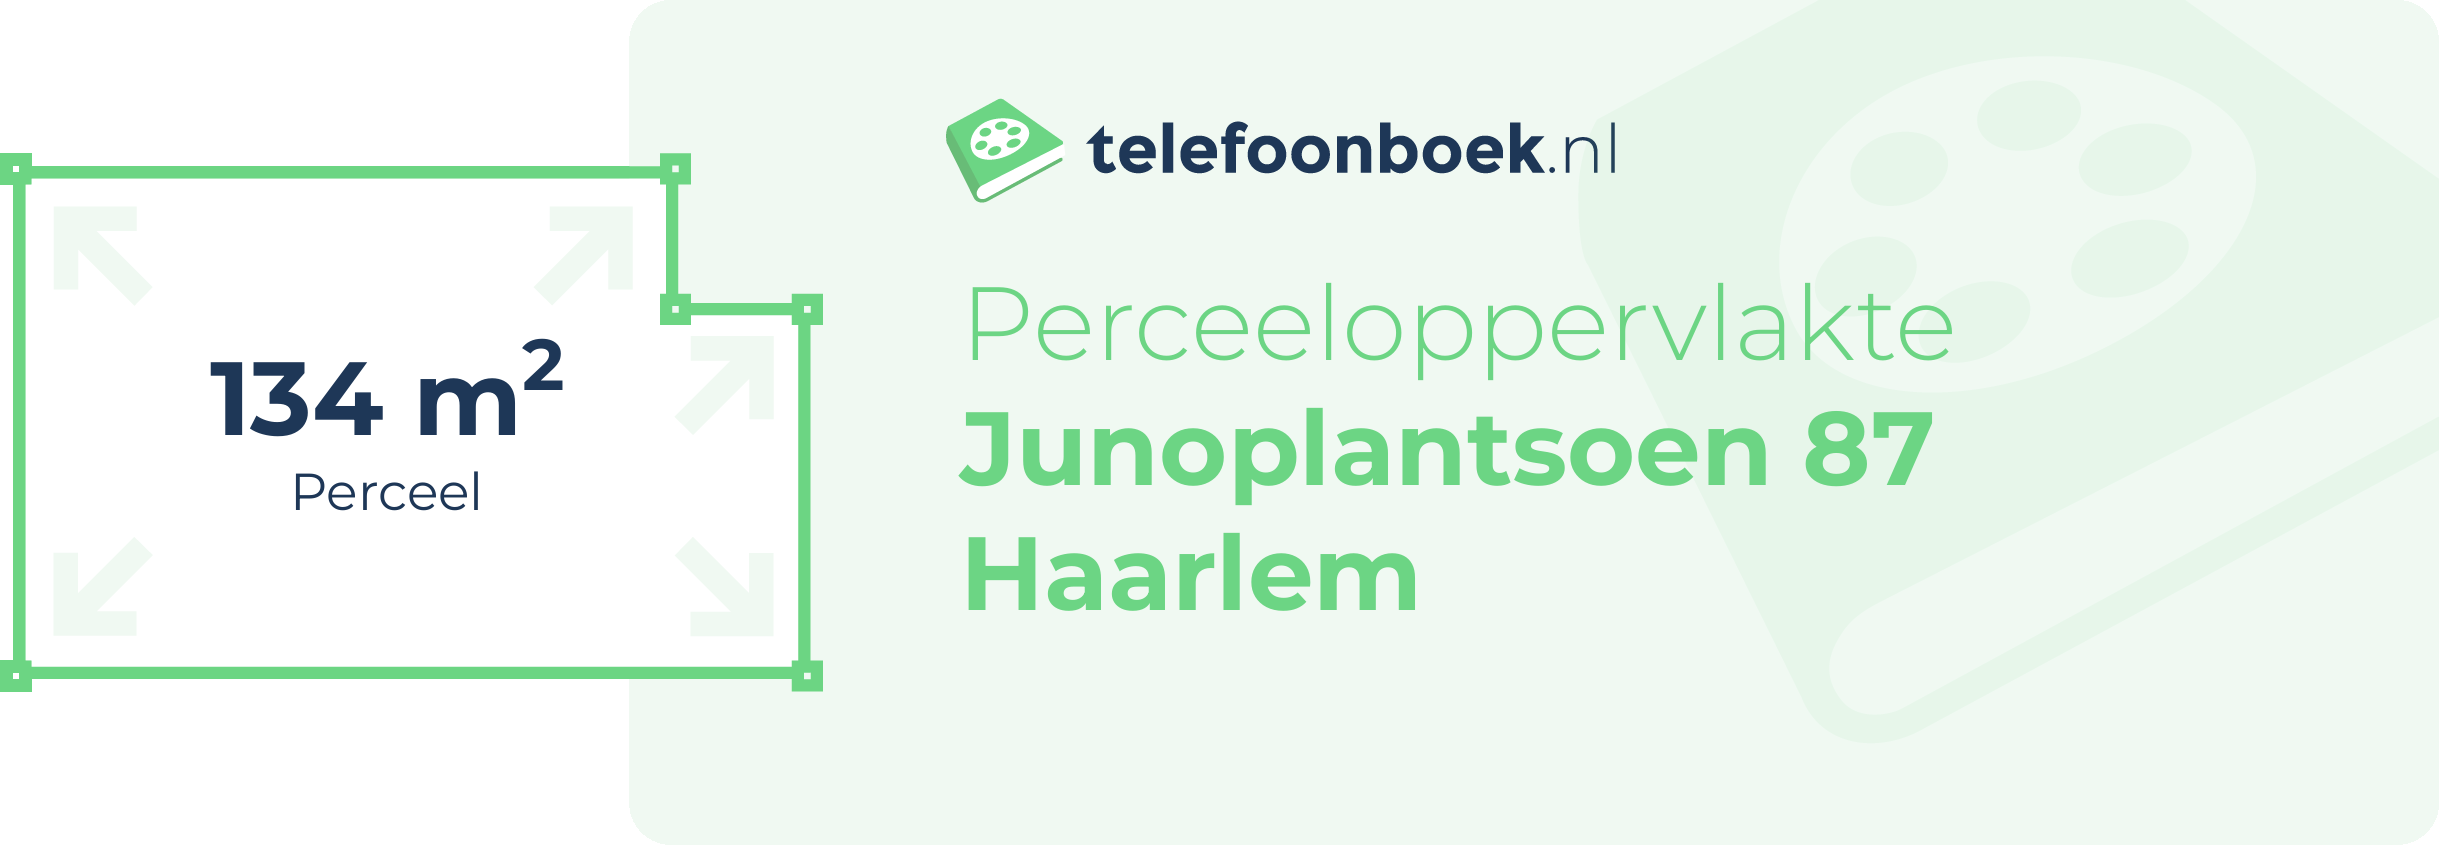 Perceeloppervlakte Junoplantsoen 87 Haarlem